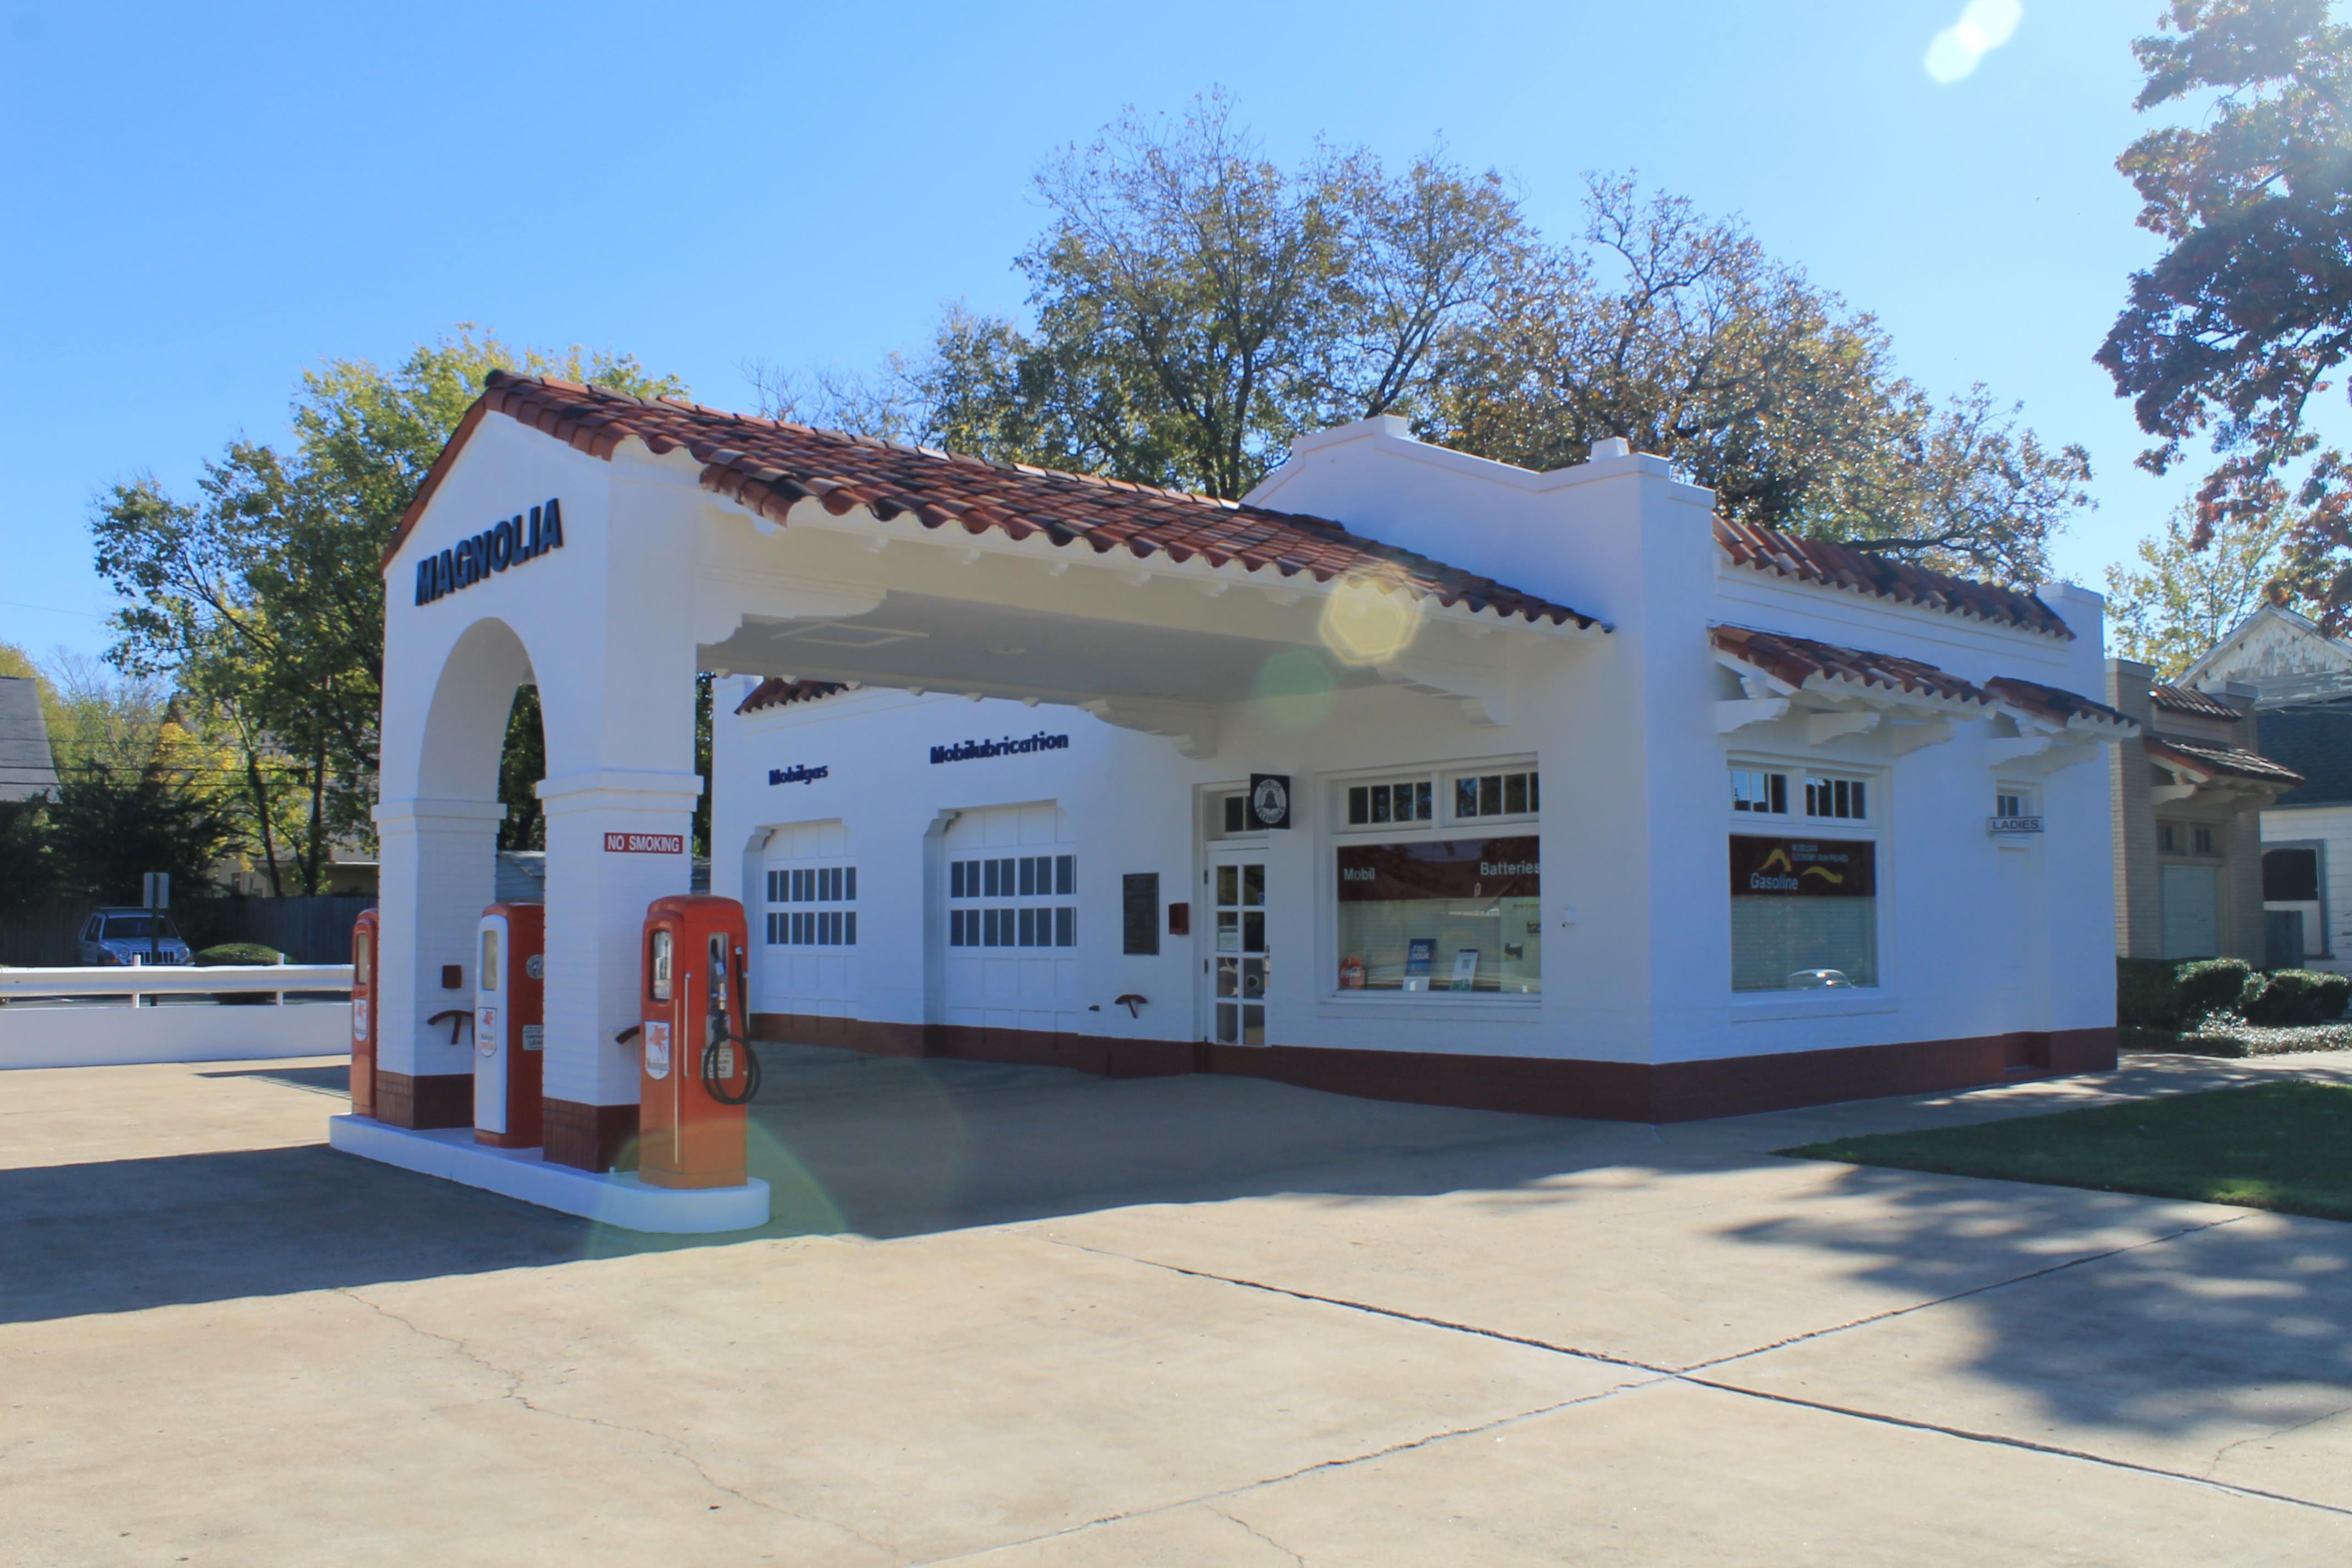 Magnolia Mobil Gas Station